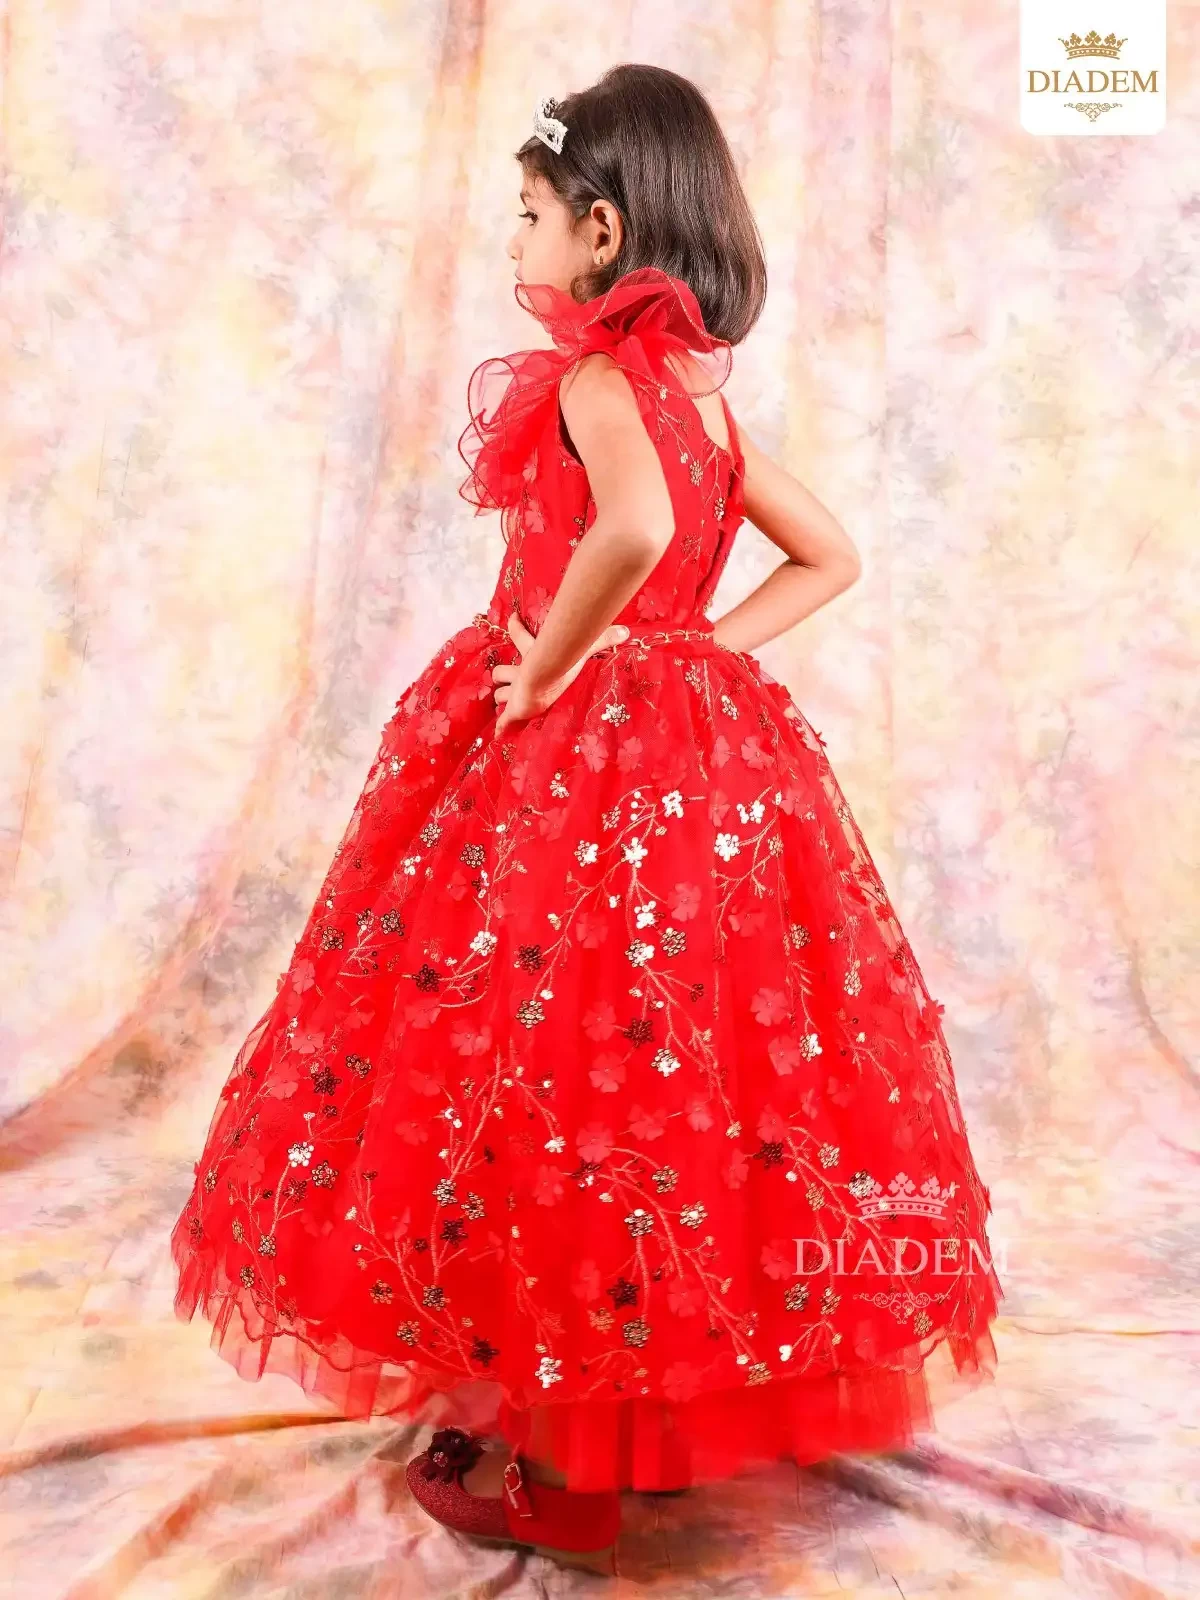 Scarlet Red Gown Embellished In Sequins And Flower Design